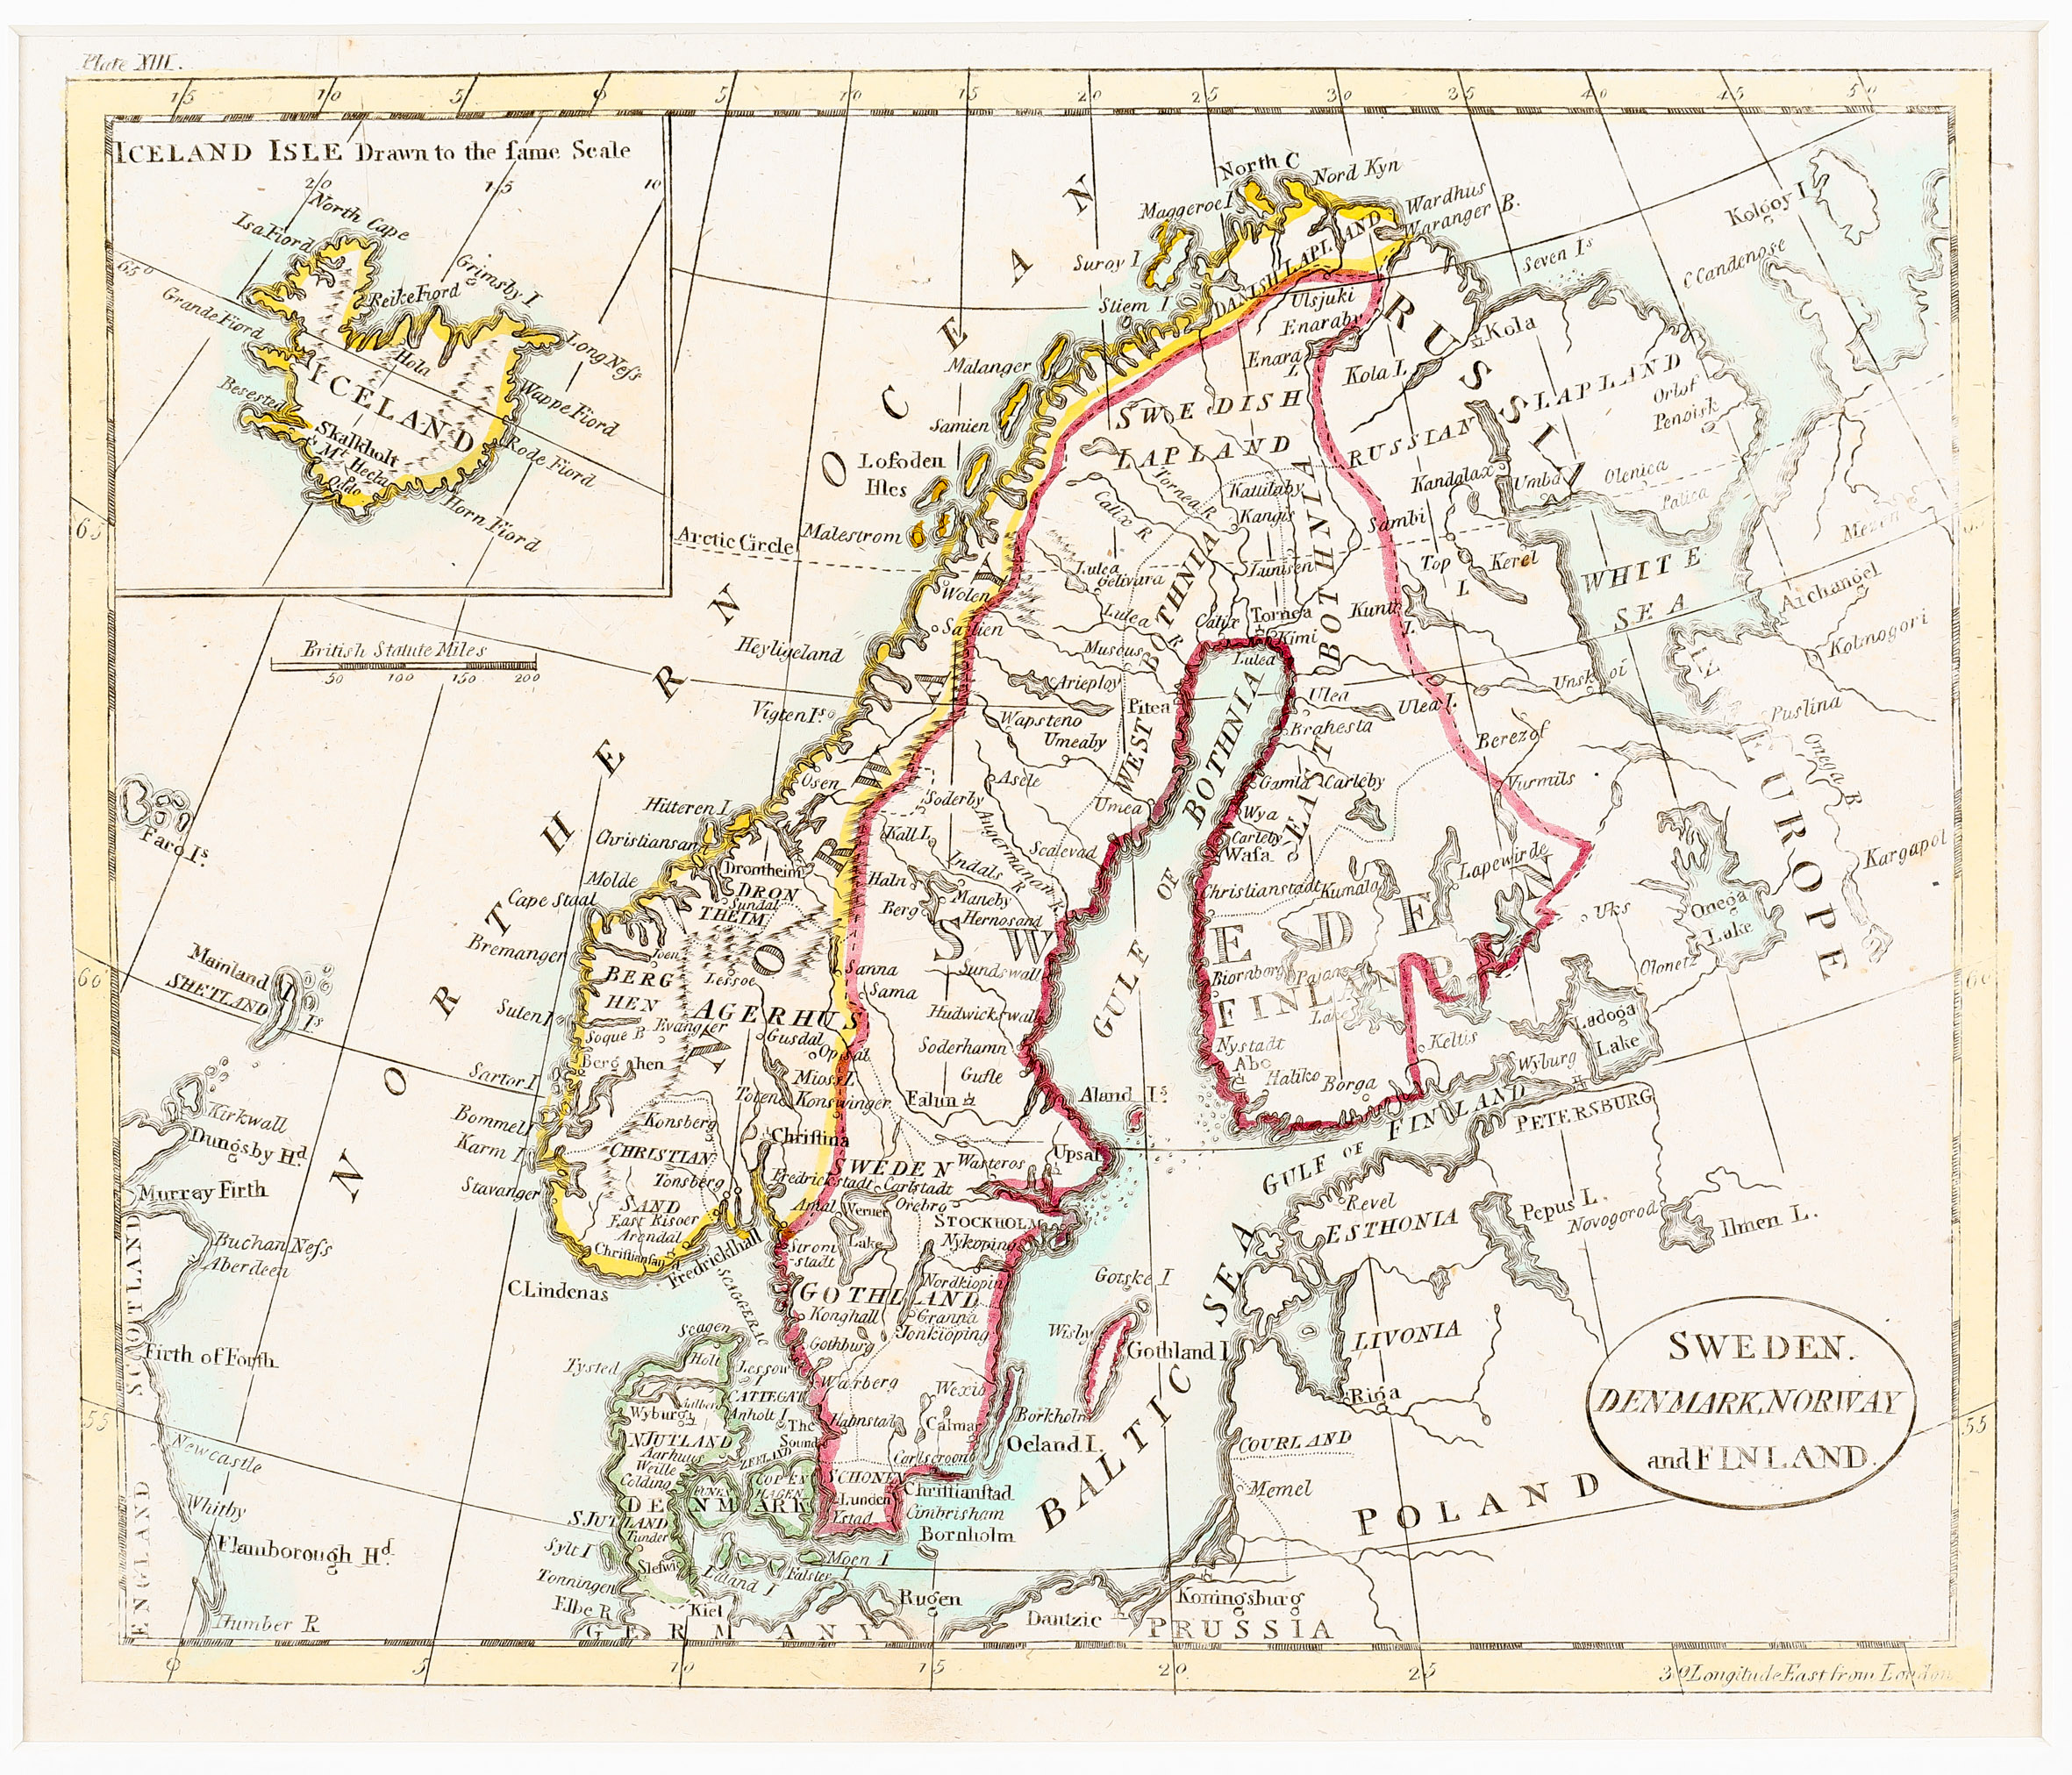 139. Sweden. Denmark. Norway and Finland.